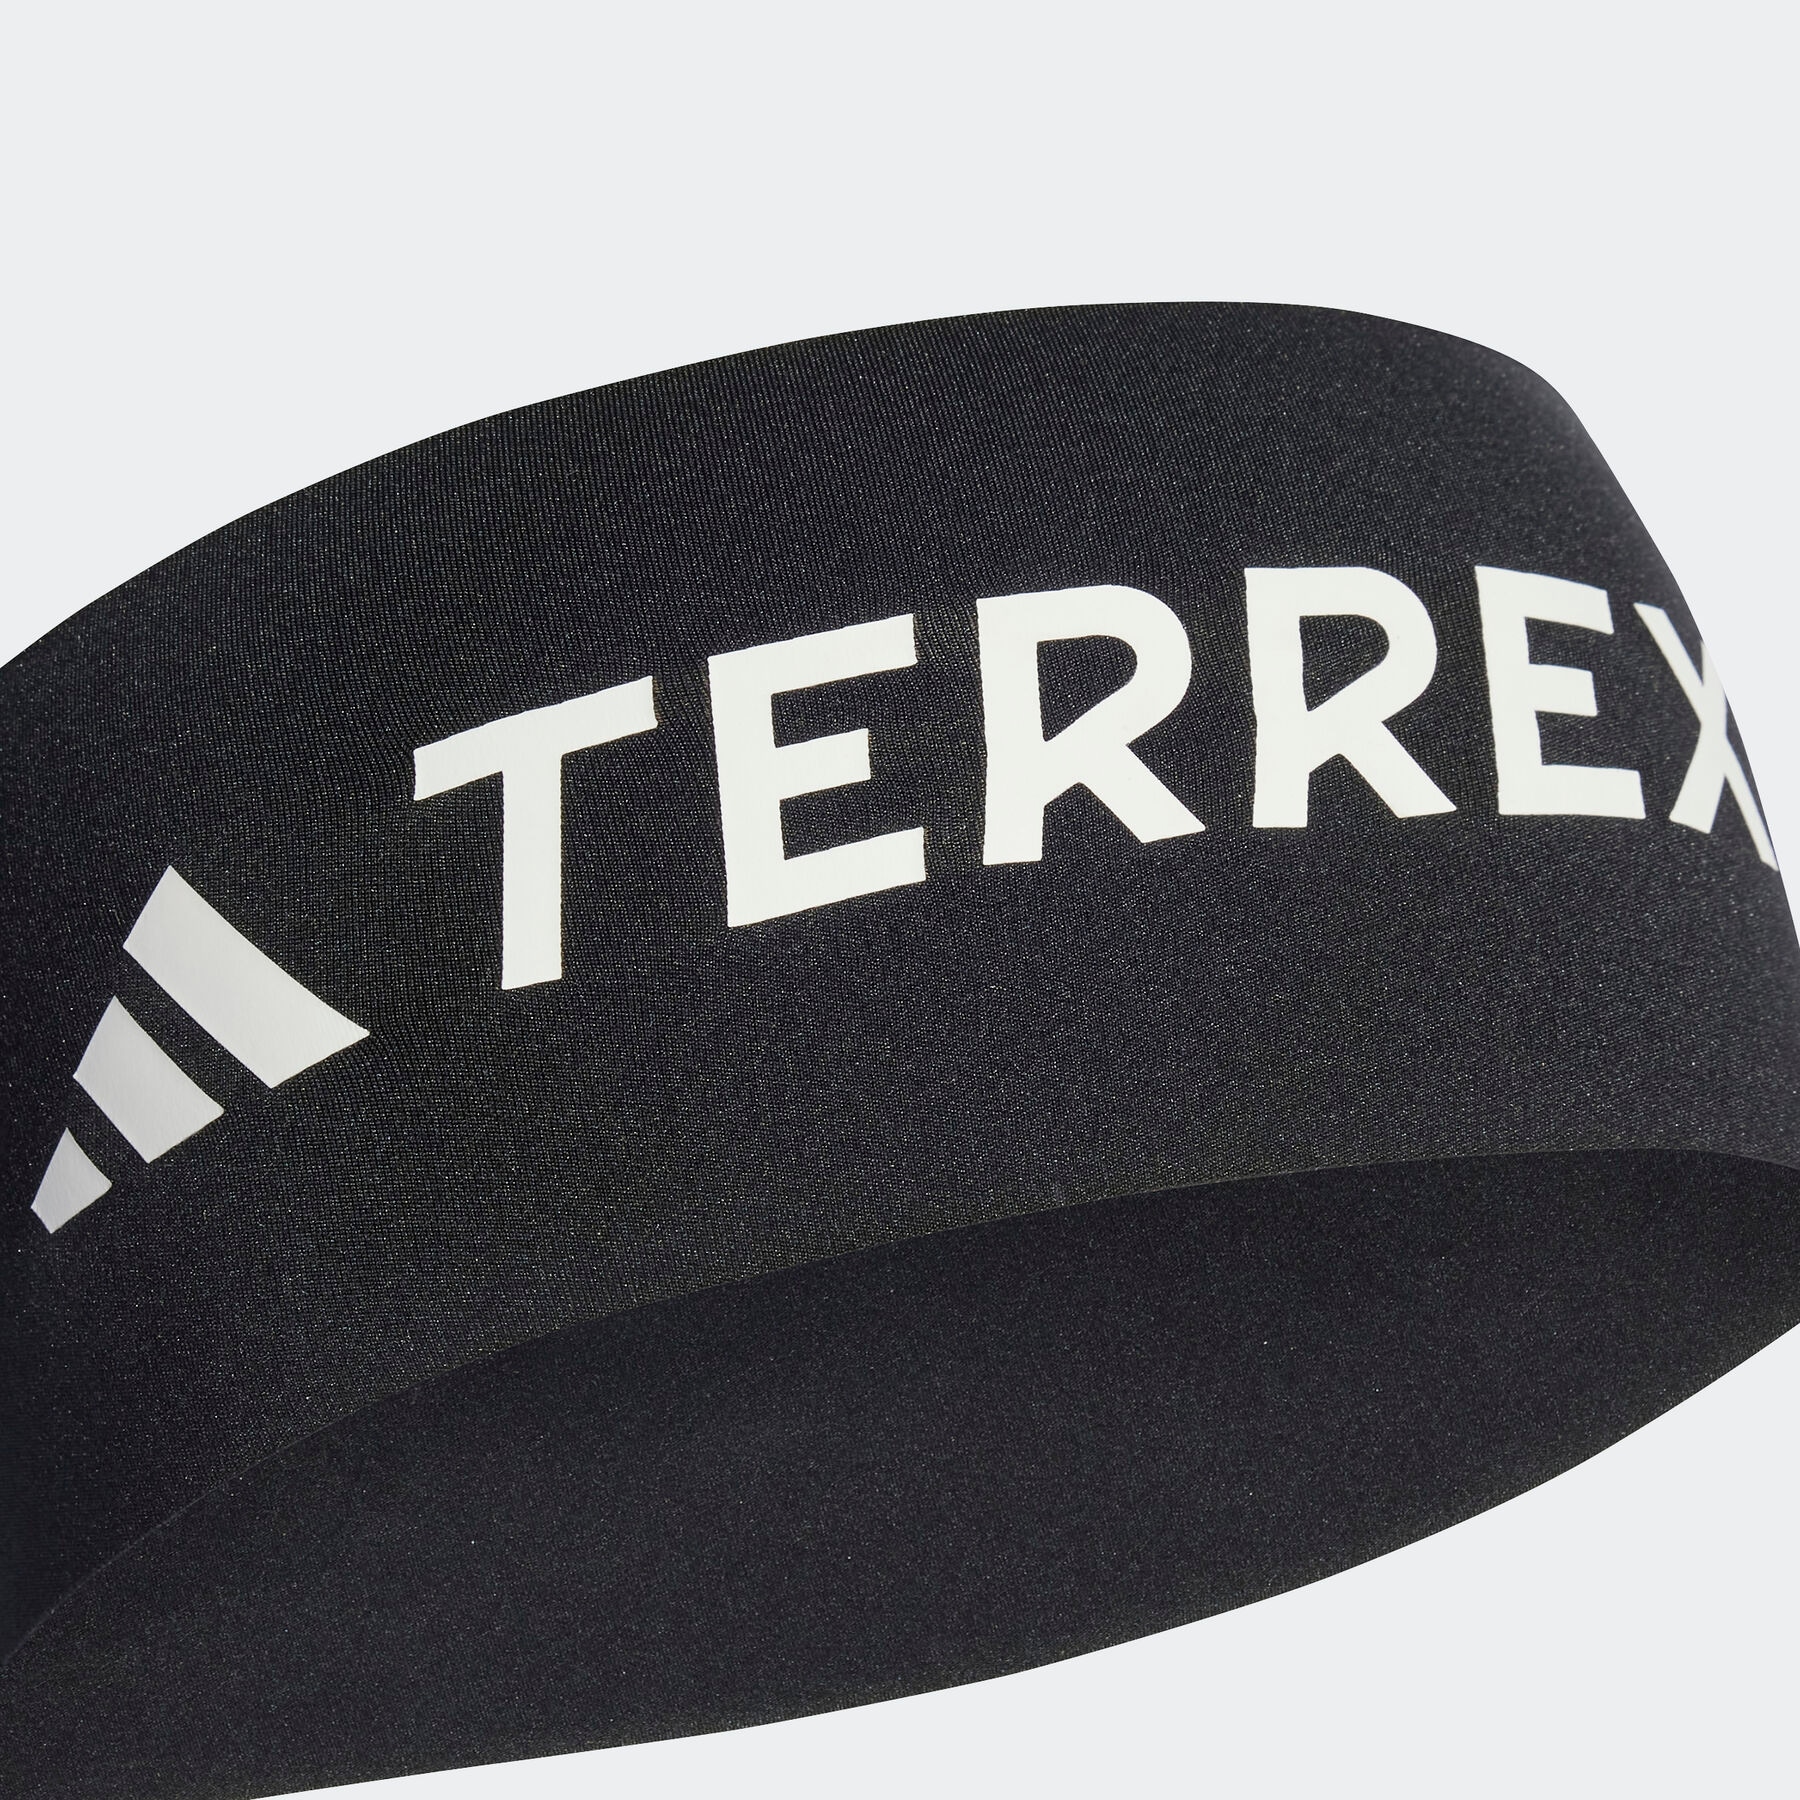 Entdecke adidas Performance Stirnband AEROREADY« auf »TERREX